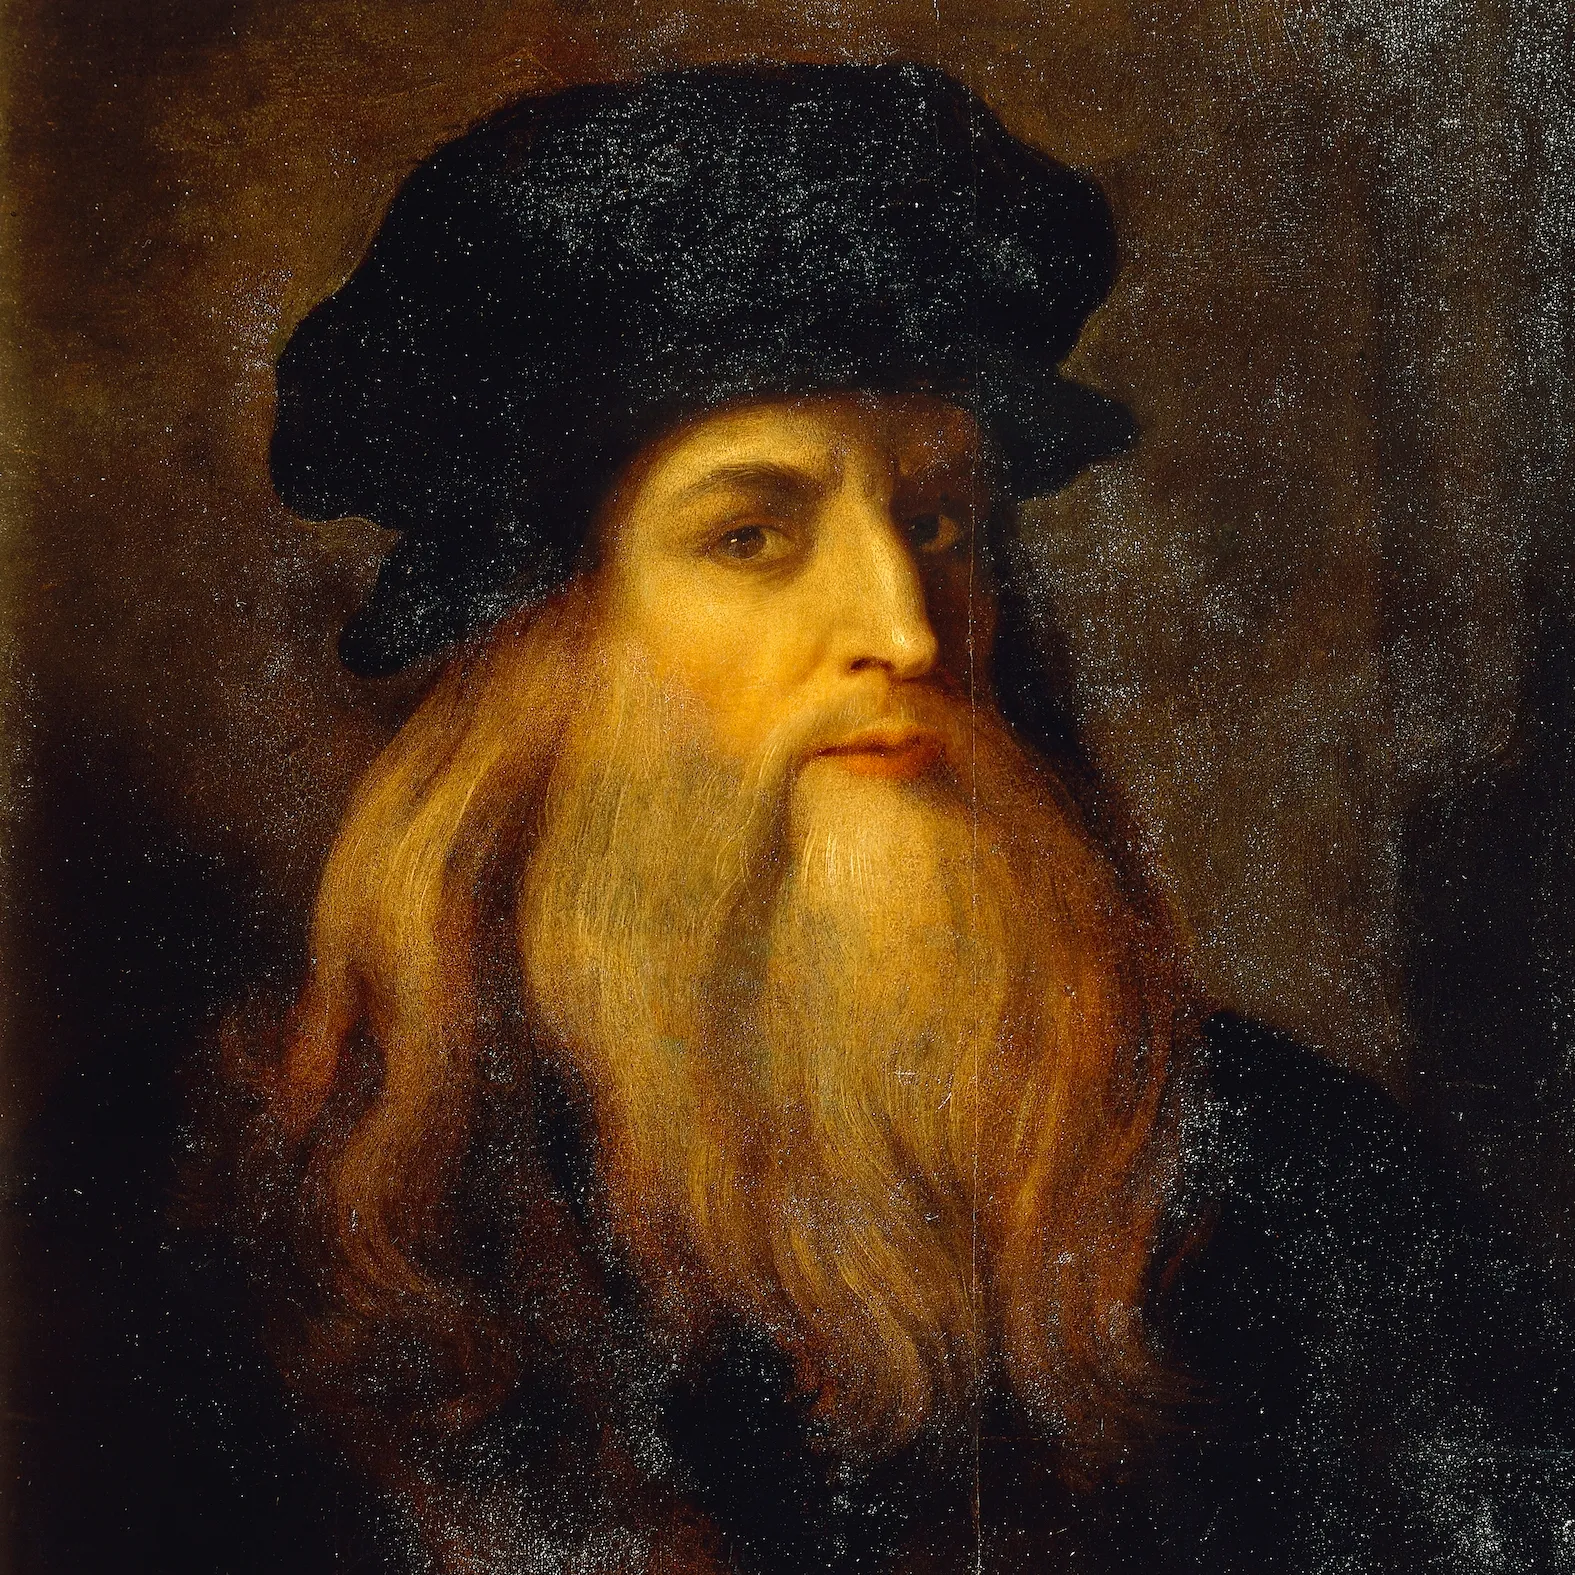 Was Leonardo da Vinci Left-Handed?